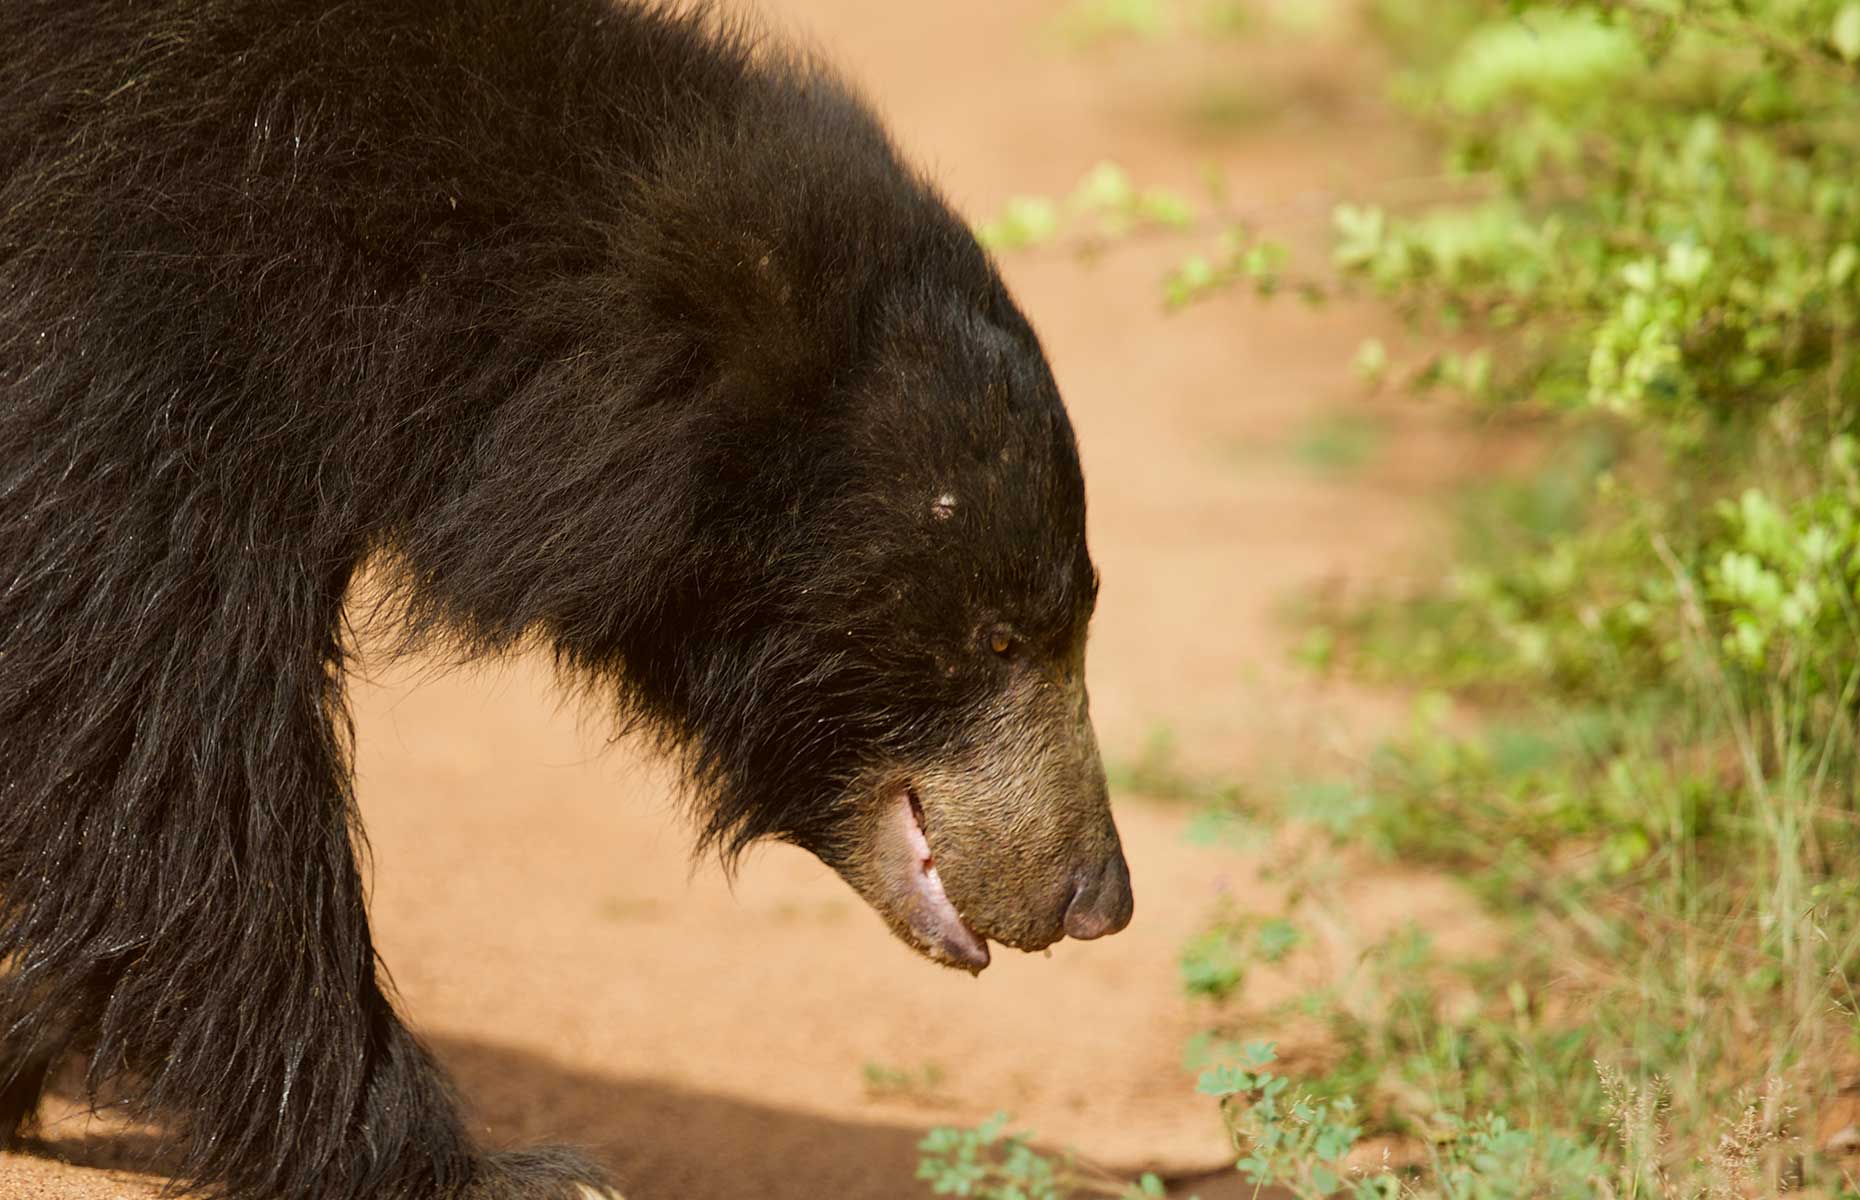 Sloth bear (Image: Saliya Illangasinghe/Shutterstock)